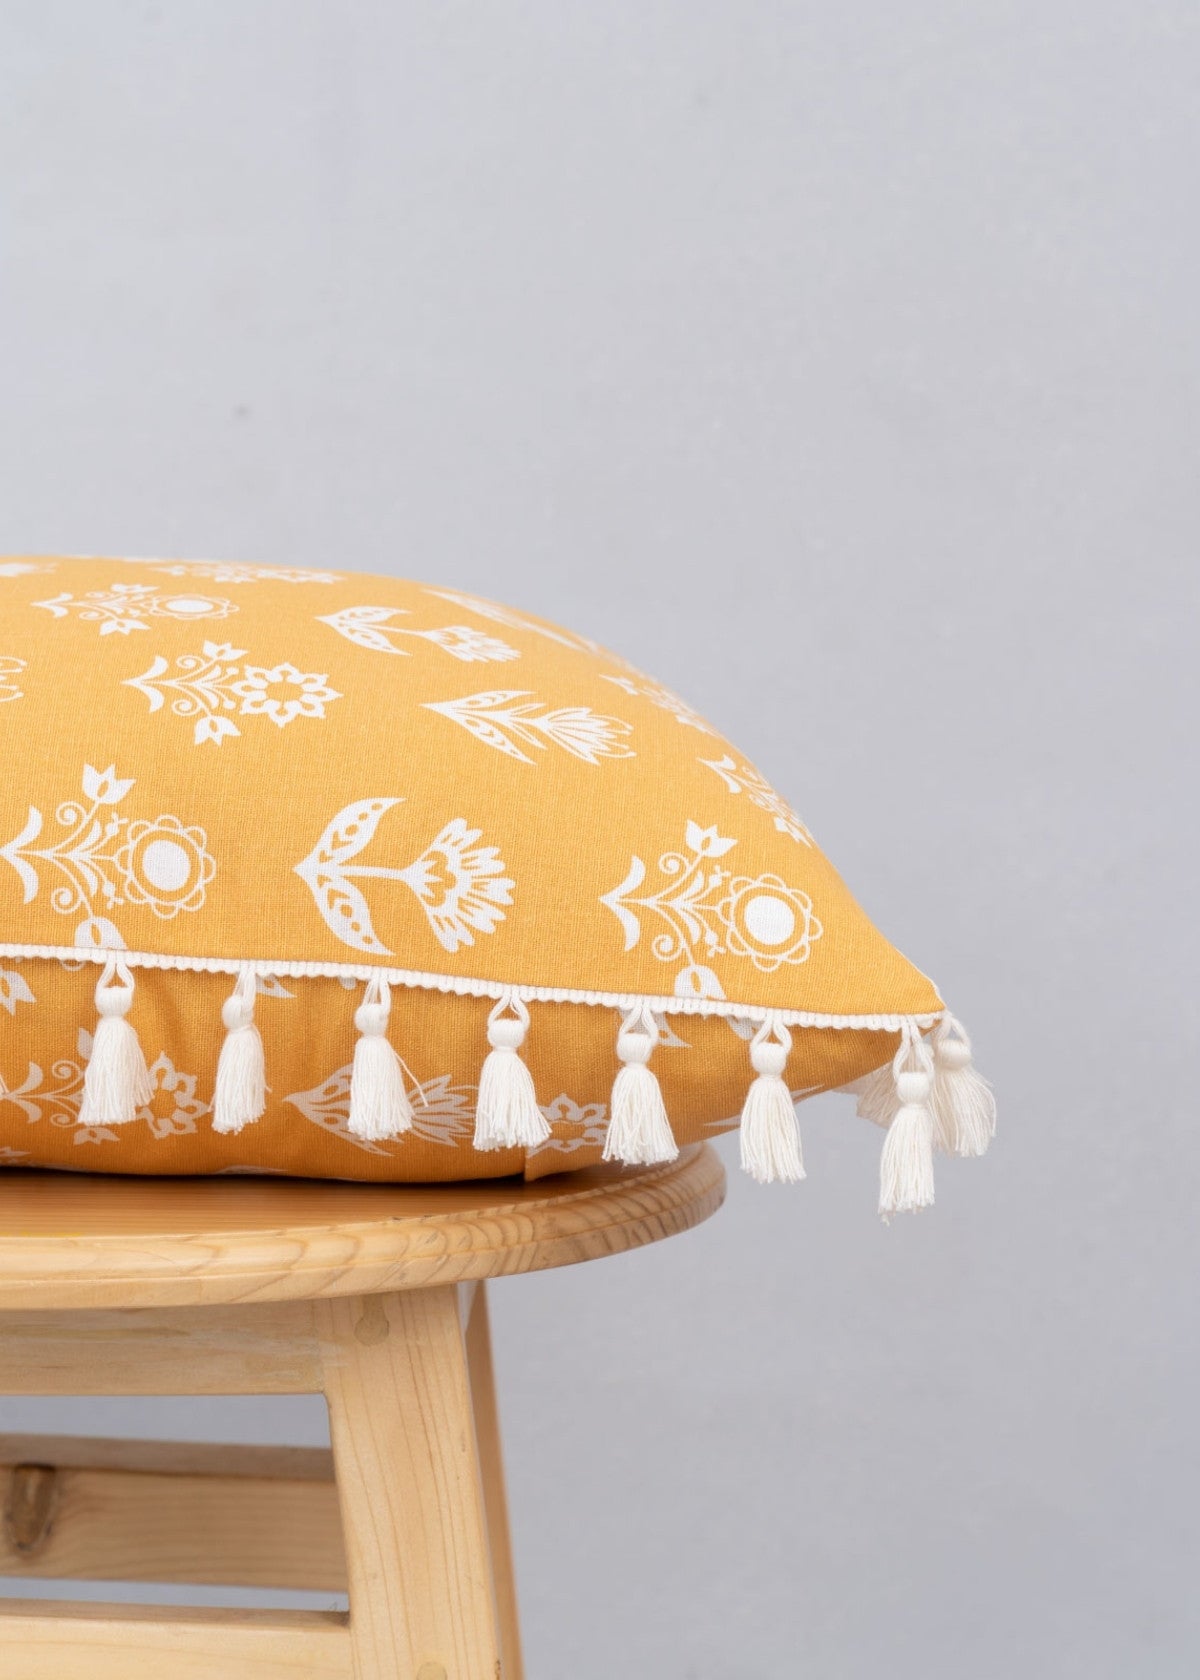 Dahlia Printed Cotton Cushion Cover - Mustard